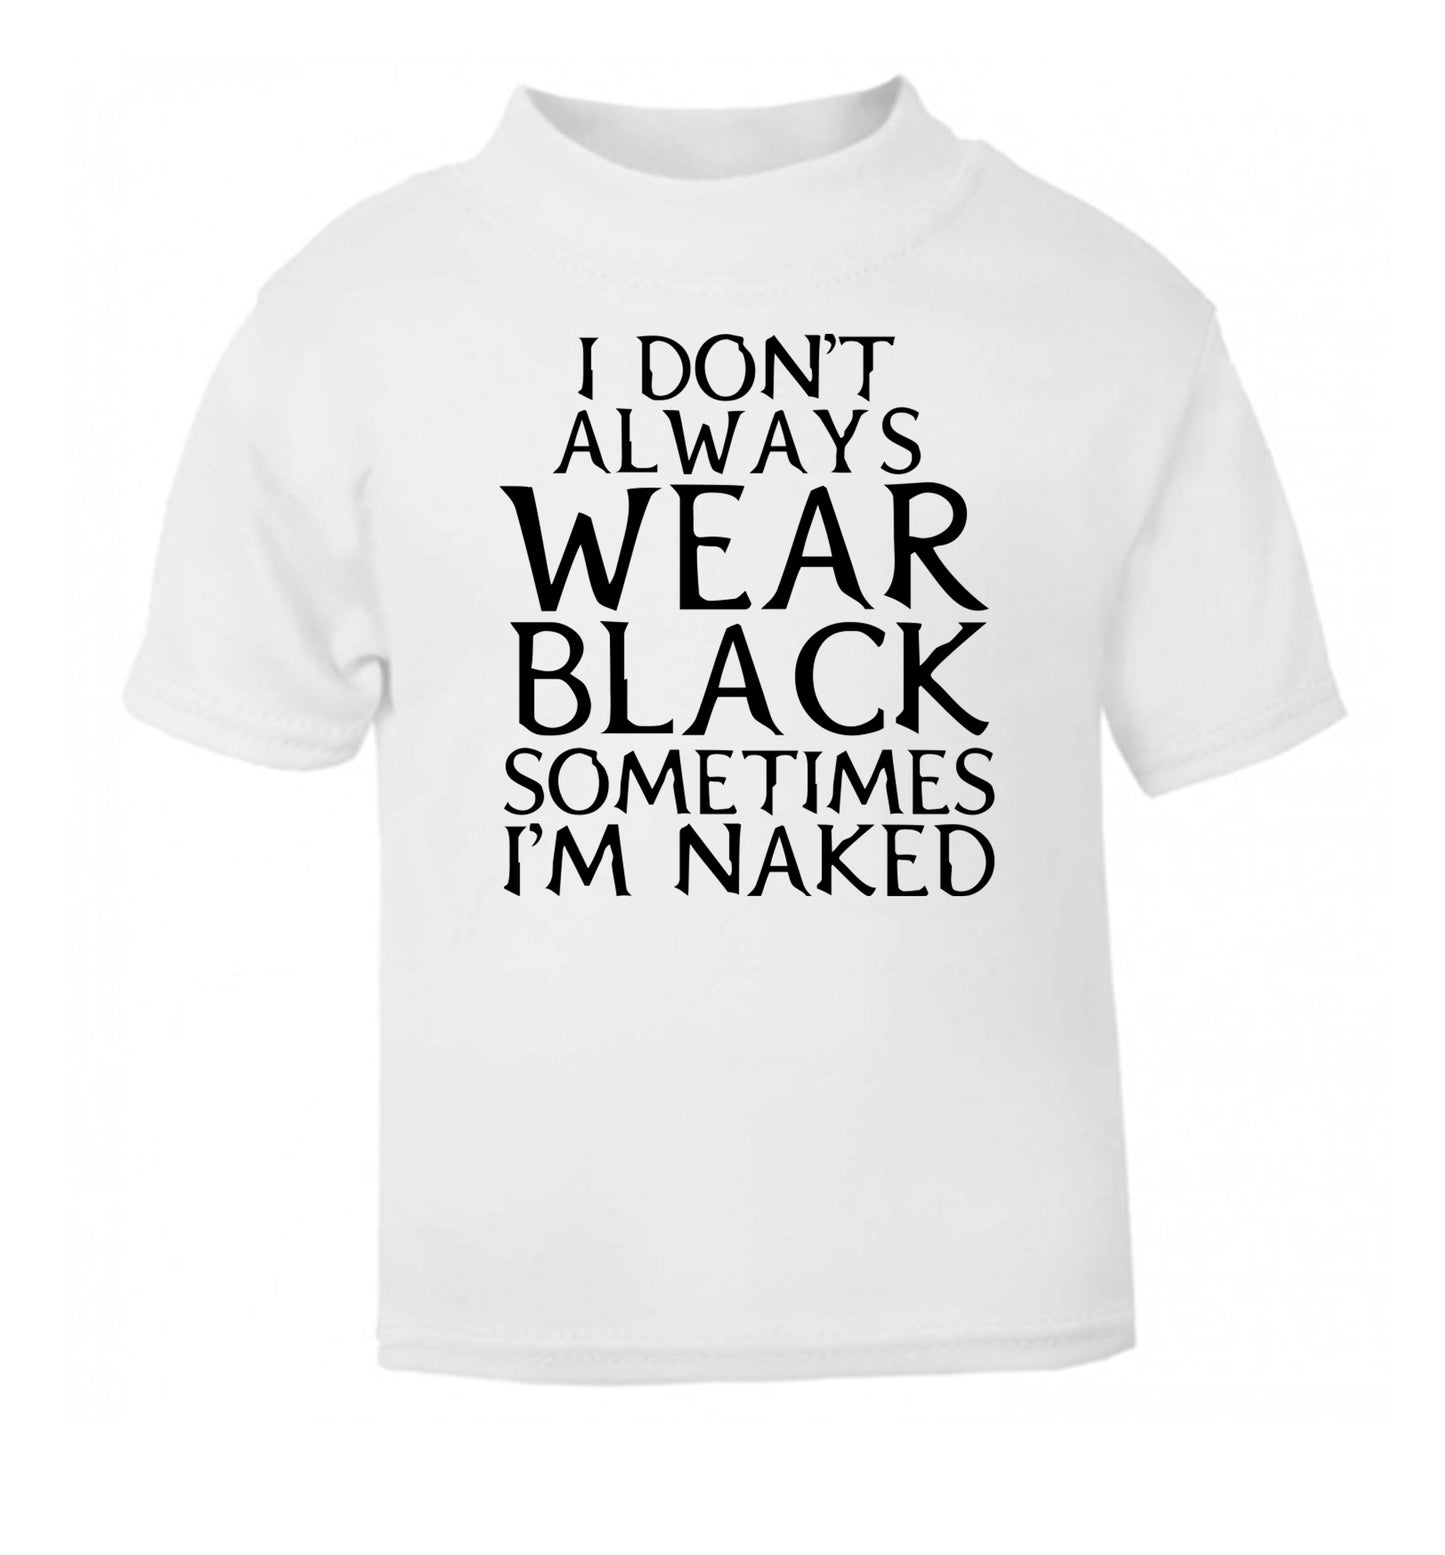 I don't always wear black sometimes I'm naked white Baby Toddler Tshirt 2 Years